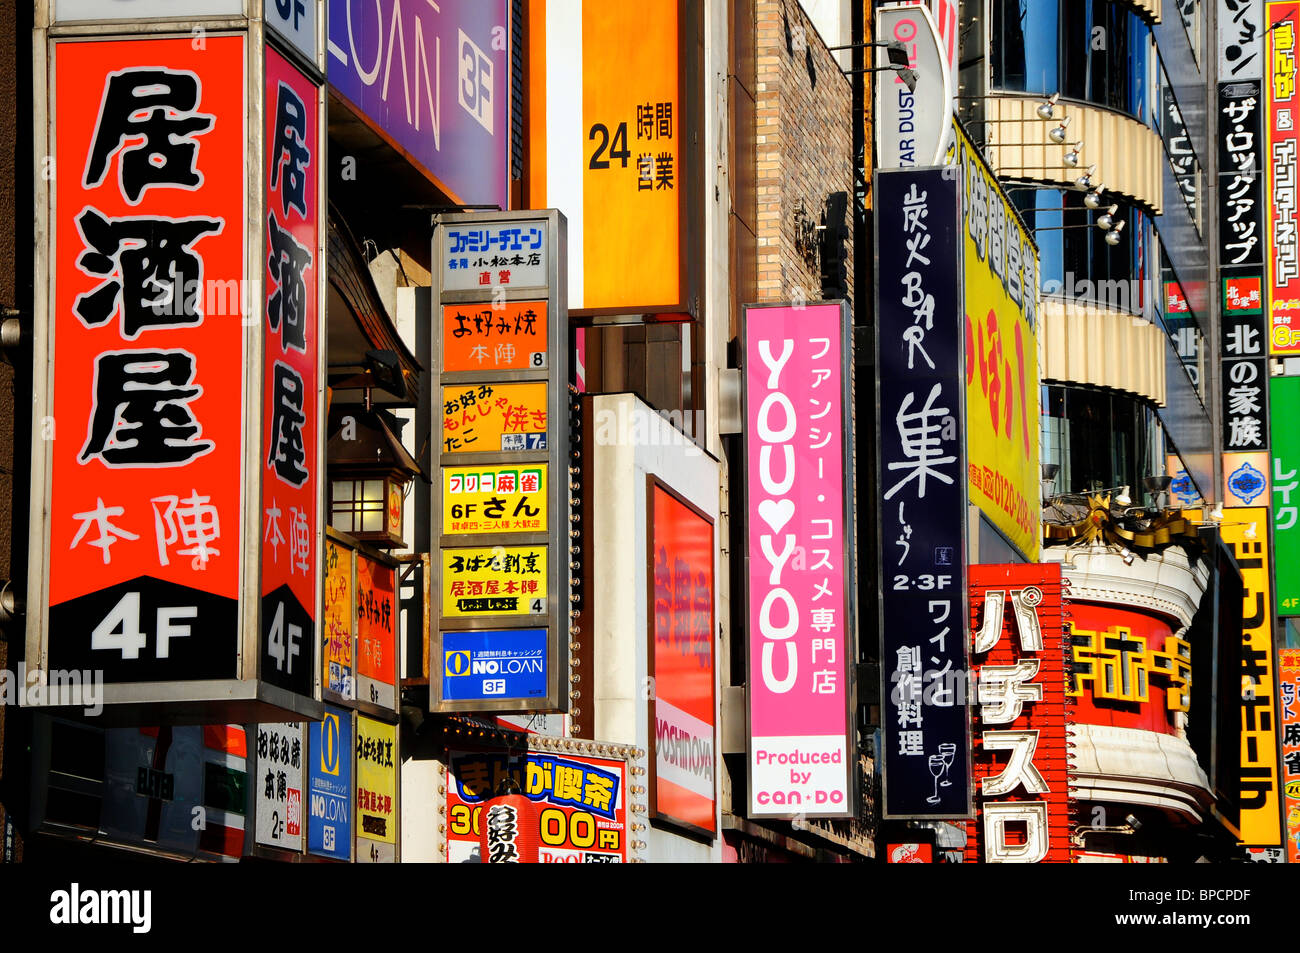 Signs in the street, Shinjuku area of Tokyo, Japan Stock Photo